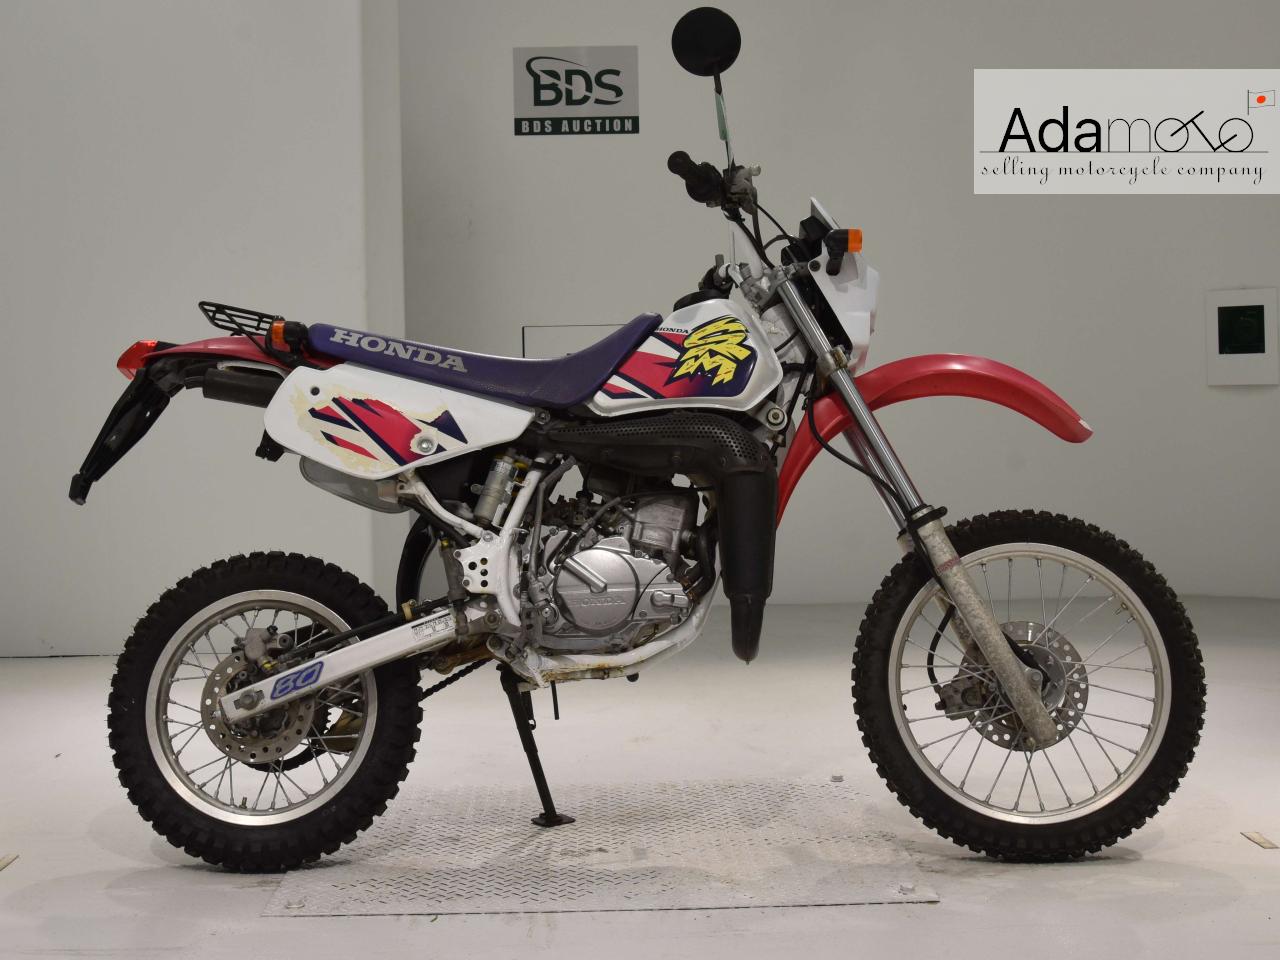 Honda CRM80-2 - Adamoto - Motorcycles from Japan